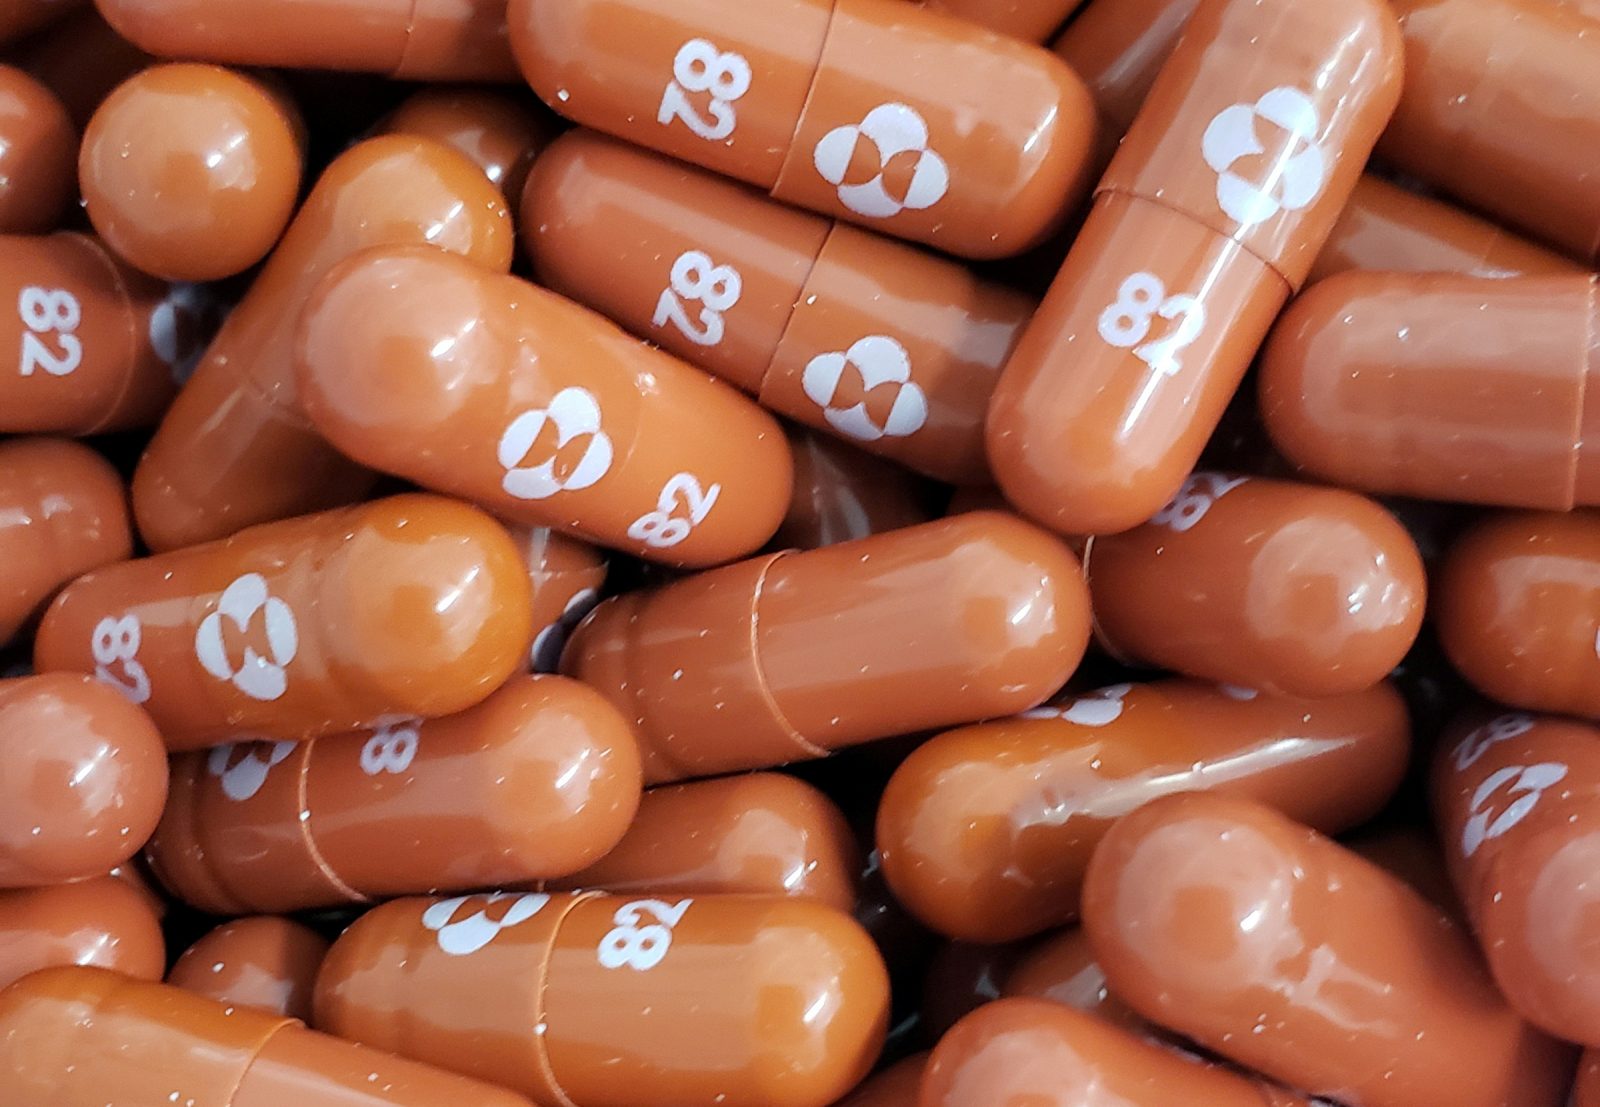 An experimental COVID-19 treatment pill called molnupiravir being developed by Merck &amp; Co Inc and Ridgeback Biotherapeutics LP. (Handout/Merck &amp; Co Inc/Reuters)